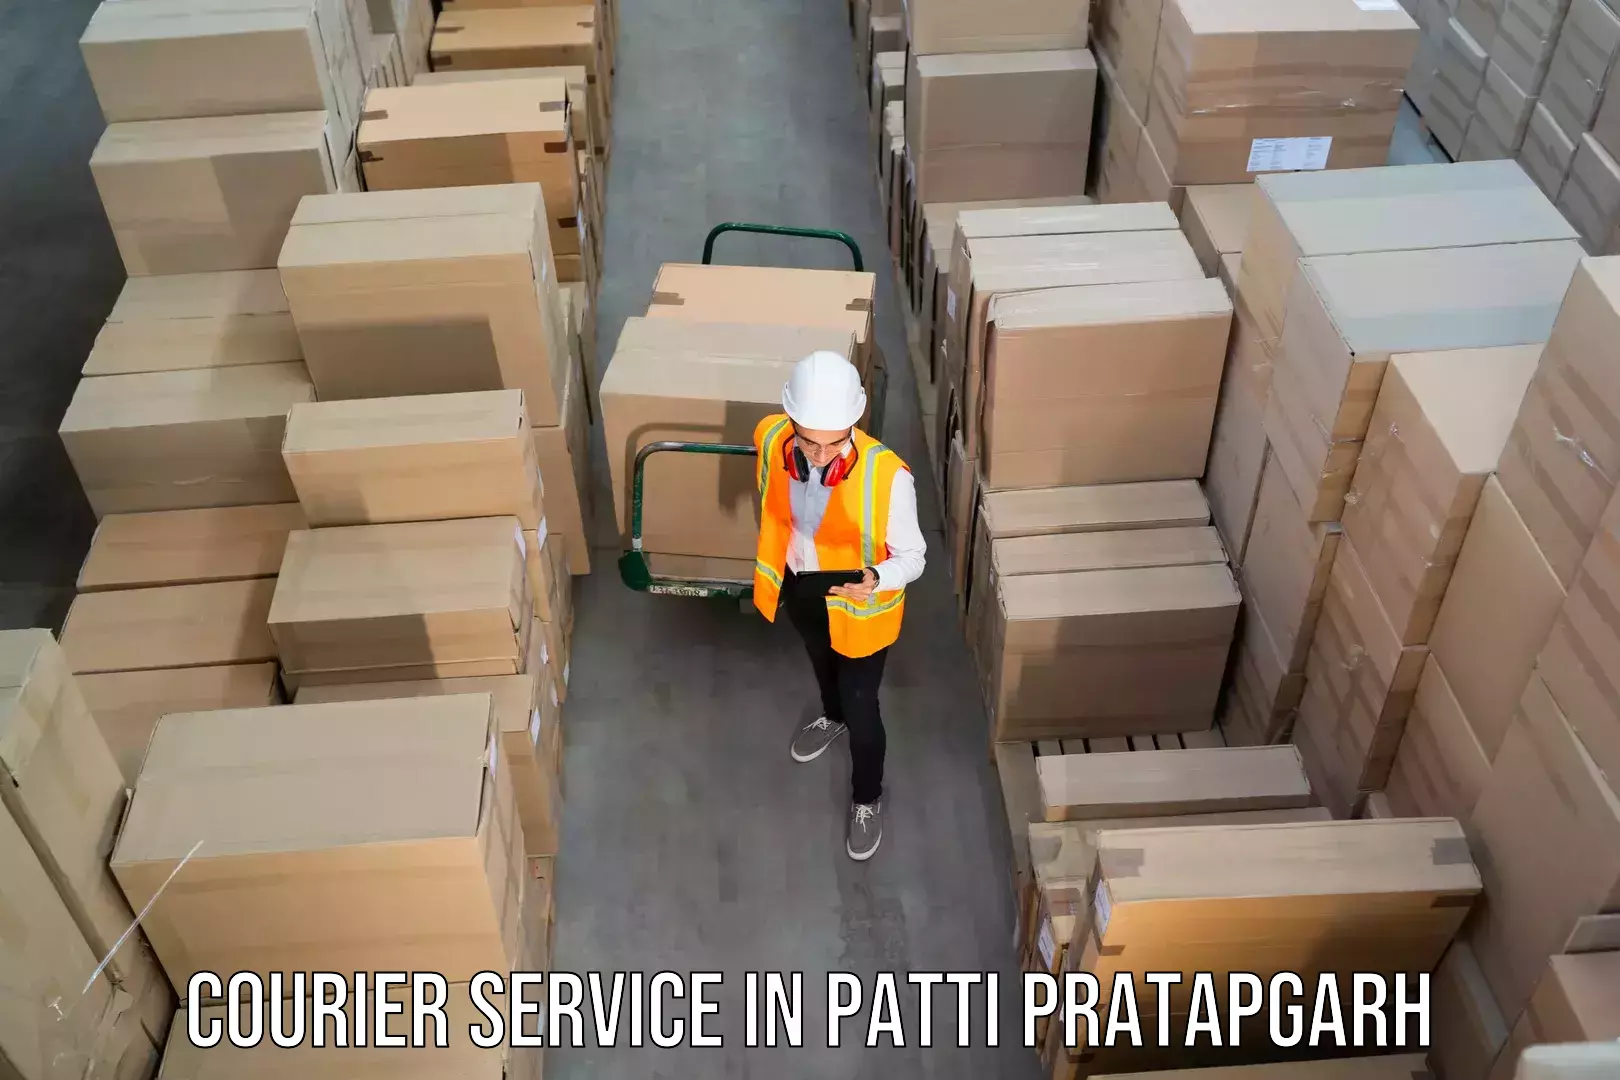 Delivery service partnership in Patti Pratapgarh